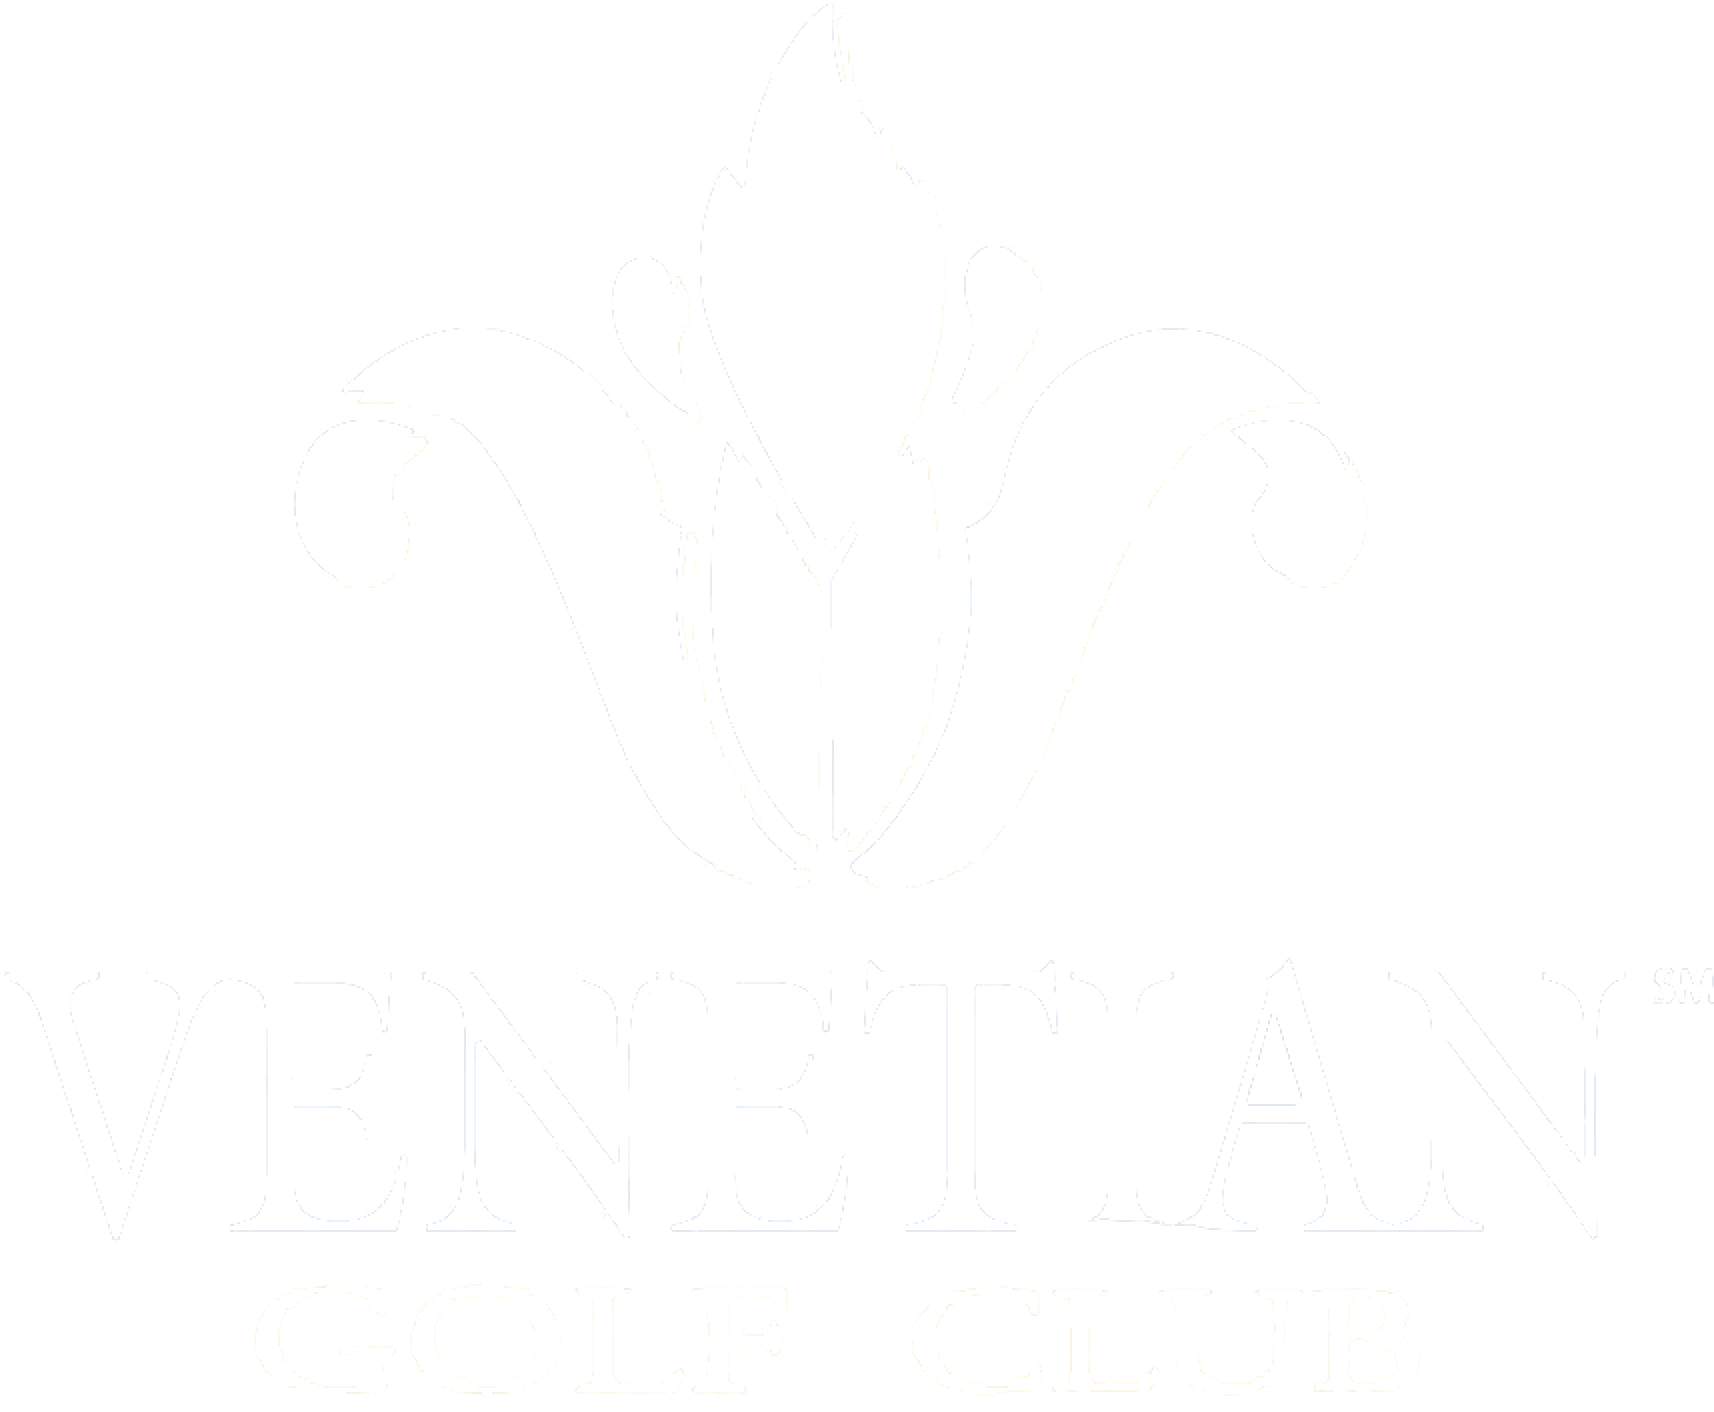 Venetian Golf Club